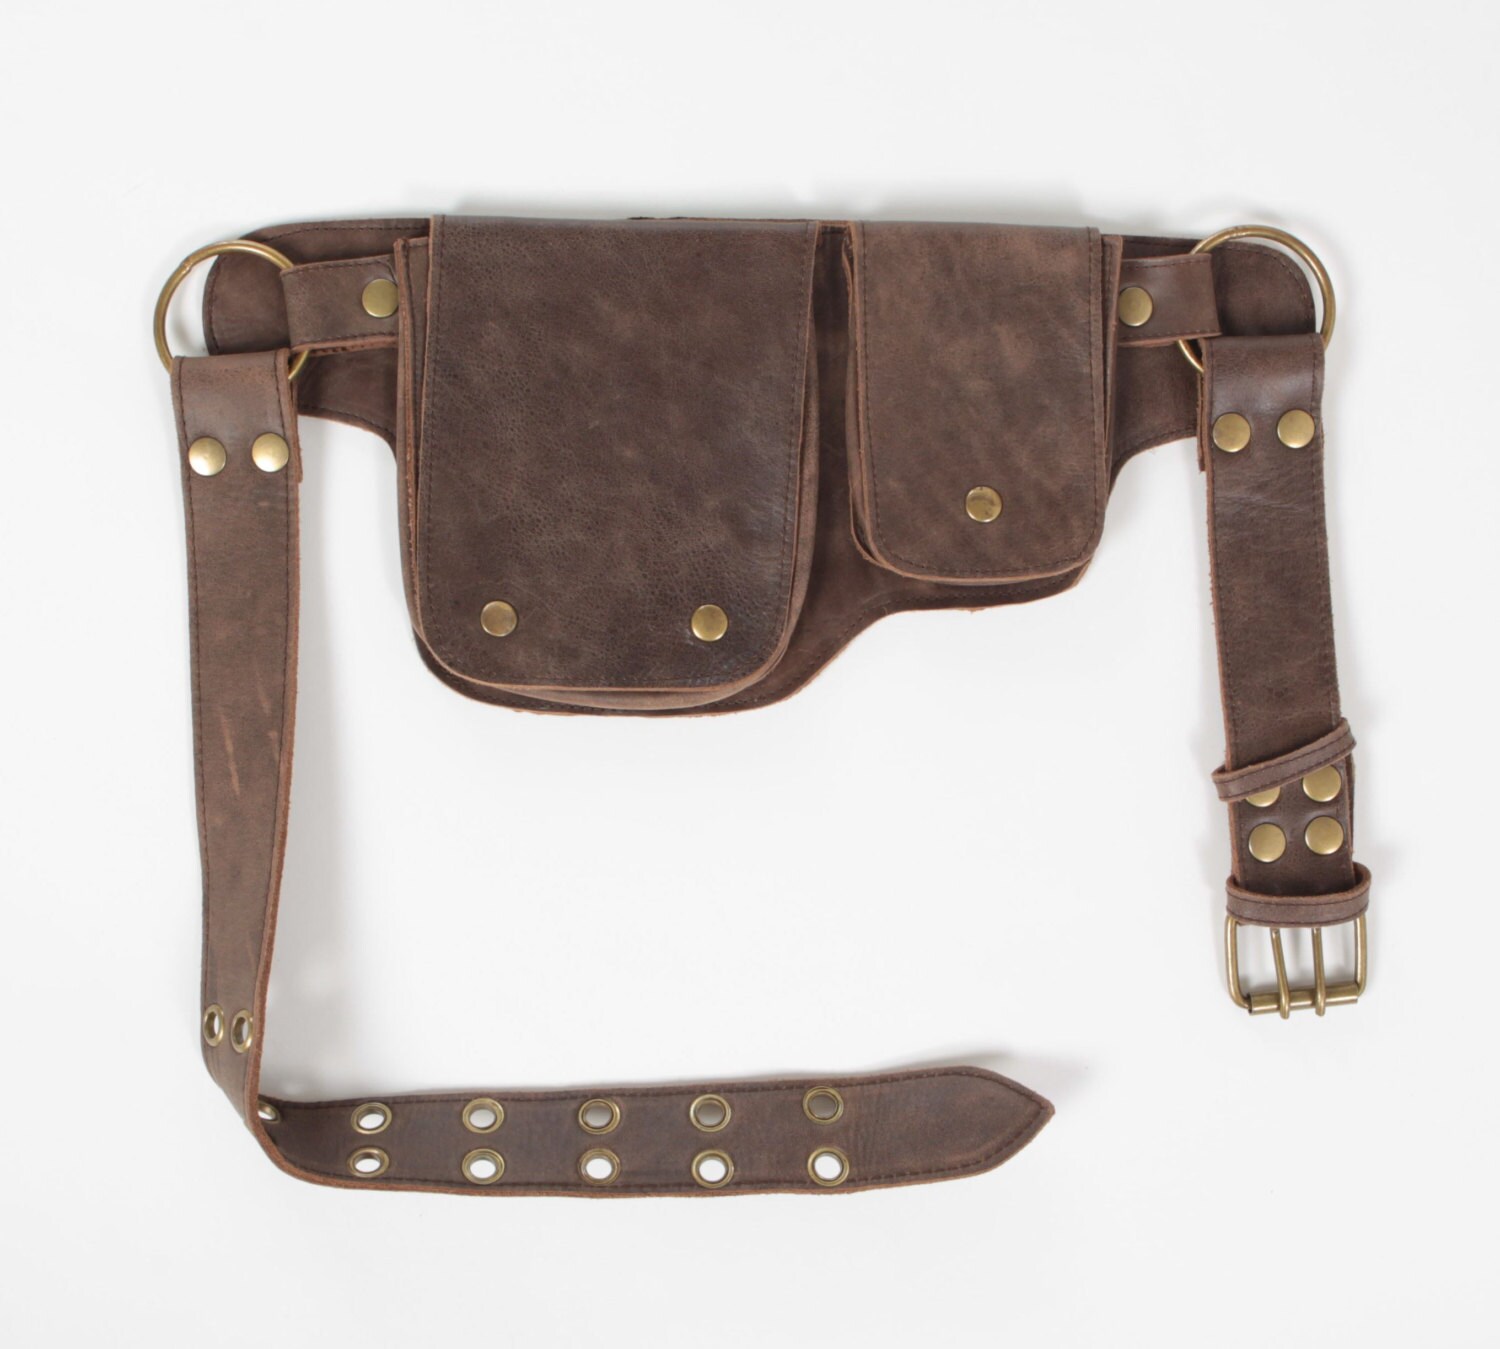 Hip Pack Leather Utility Belt Bomber Brown Largest pockets | Etsy